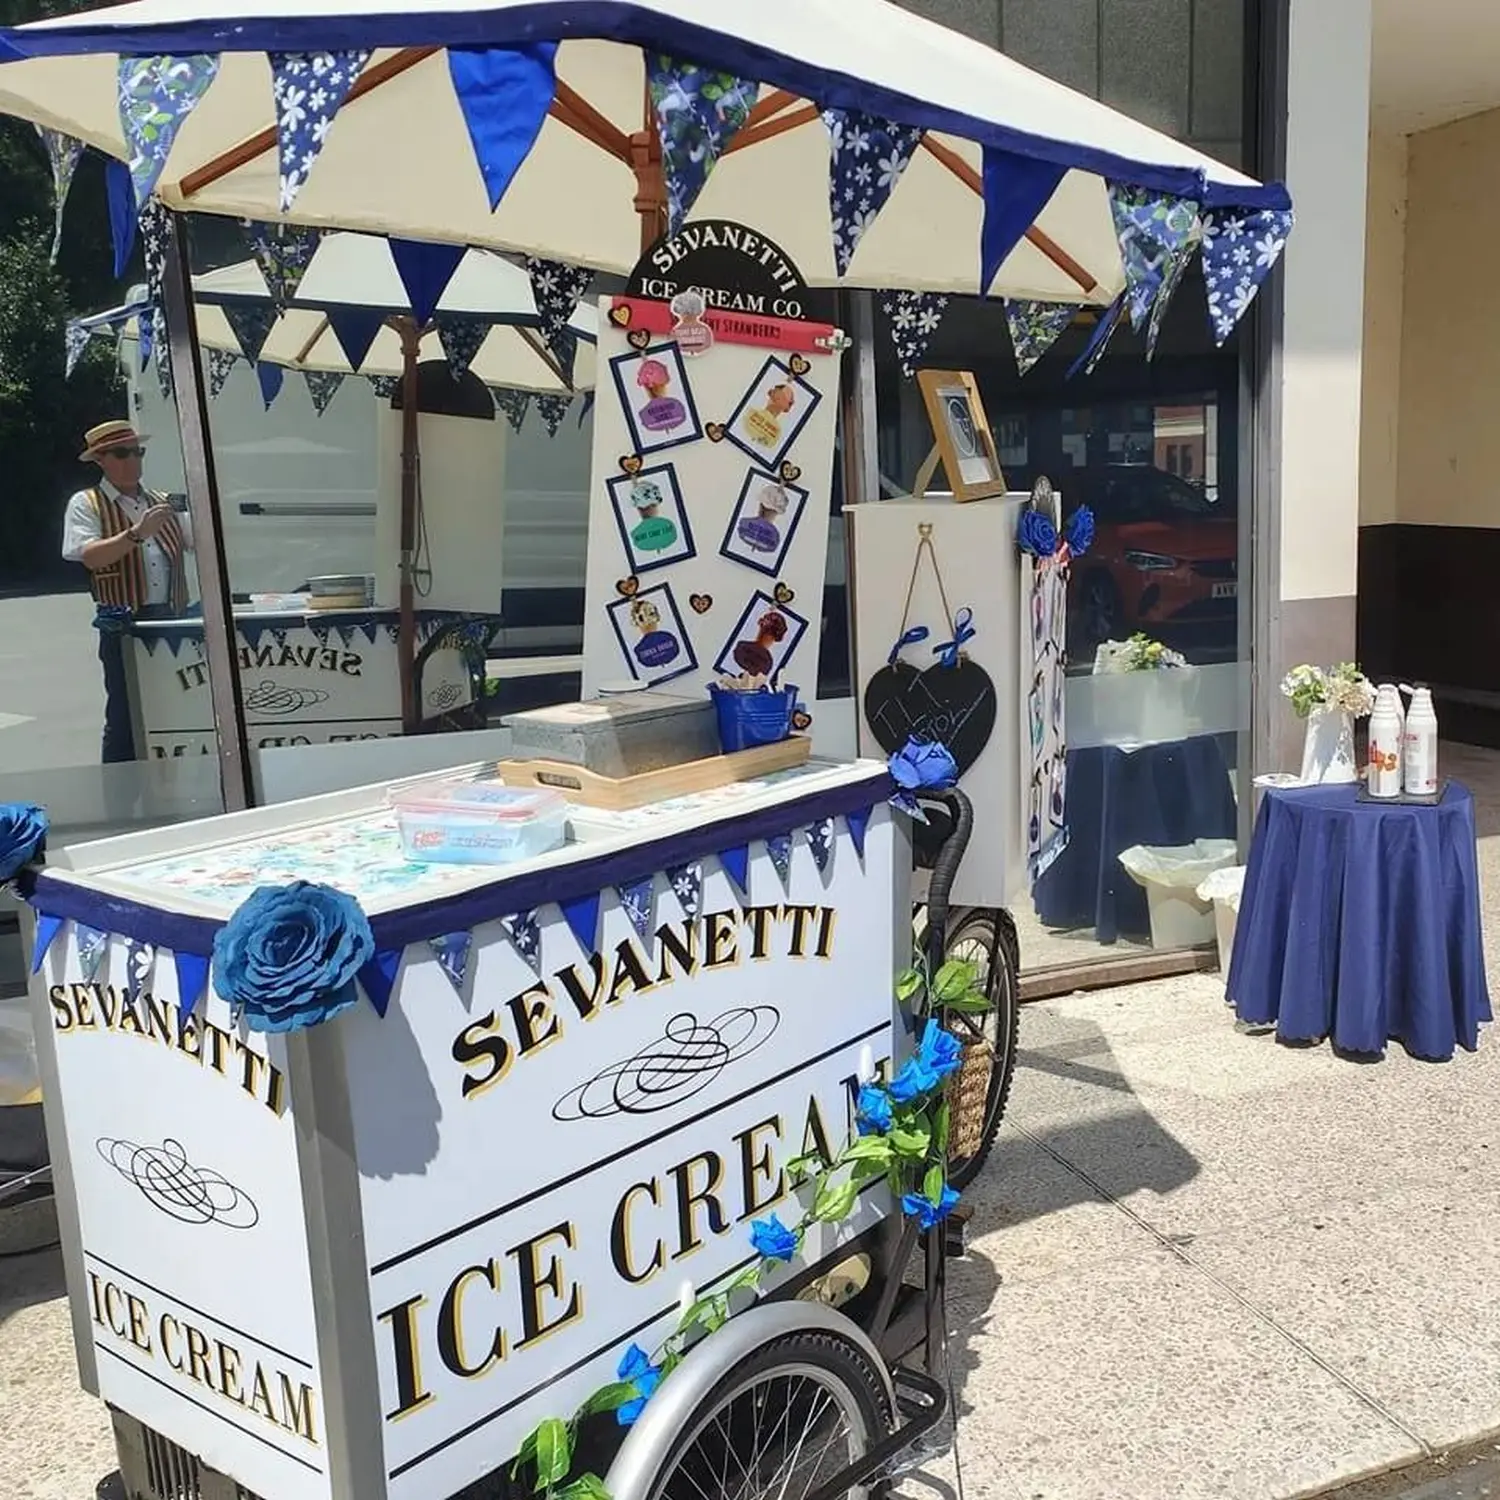 Sevanetti Ice Cream Navy Blue Decoration Set